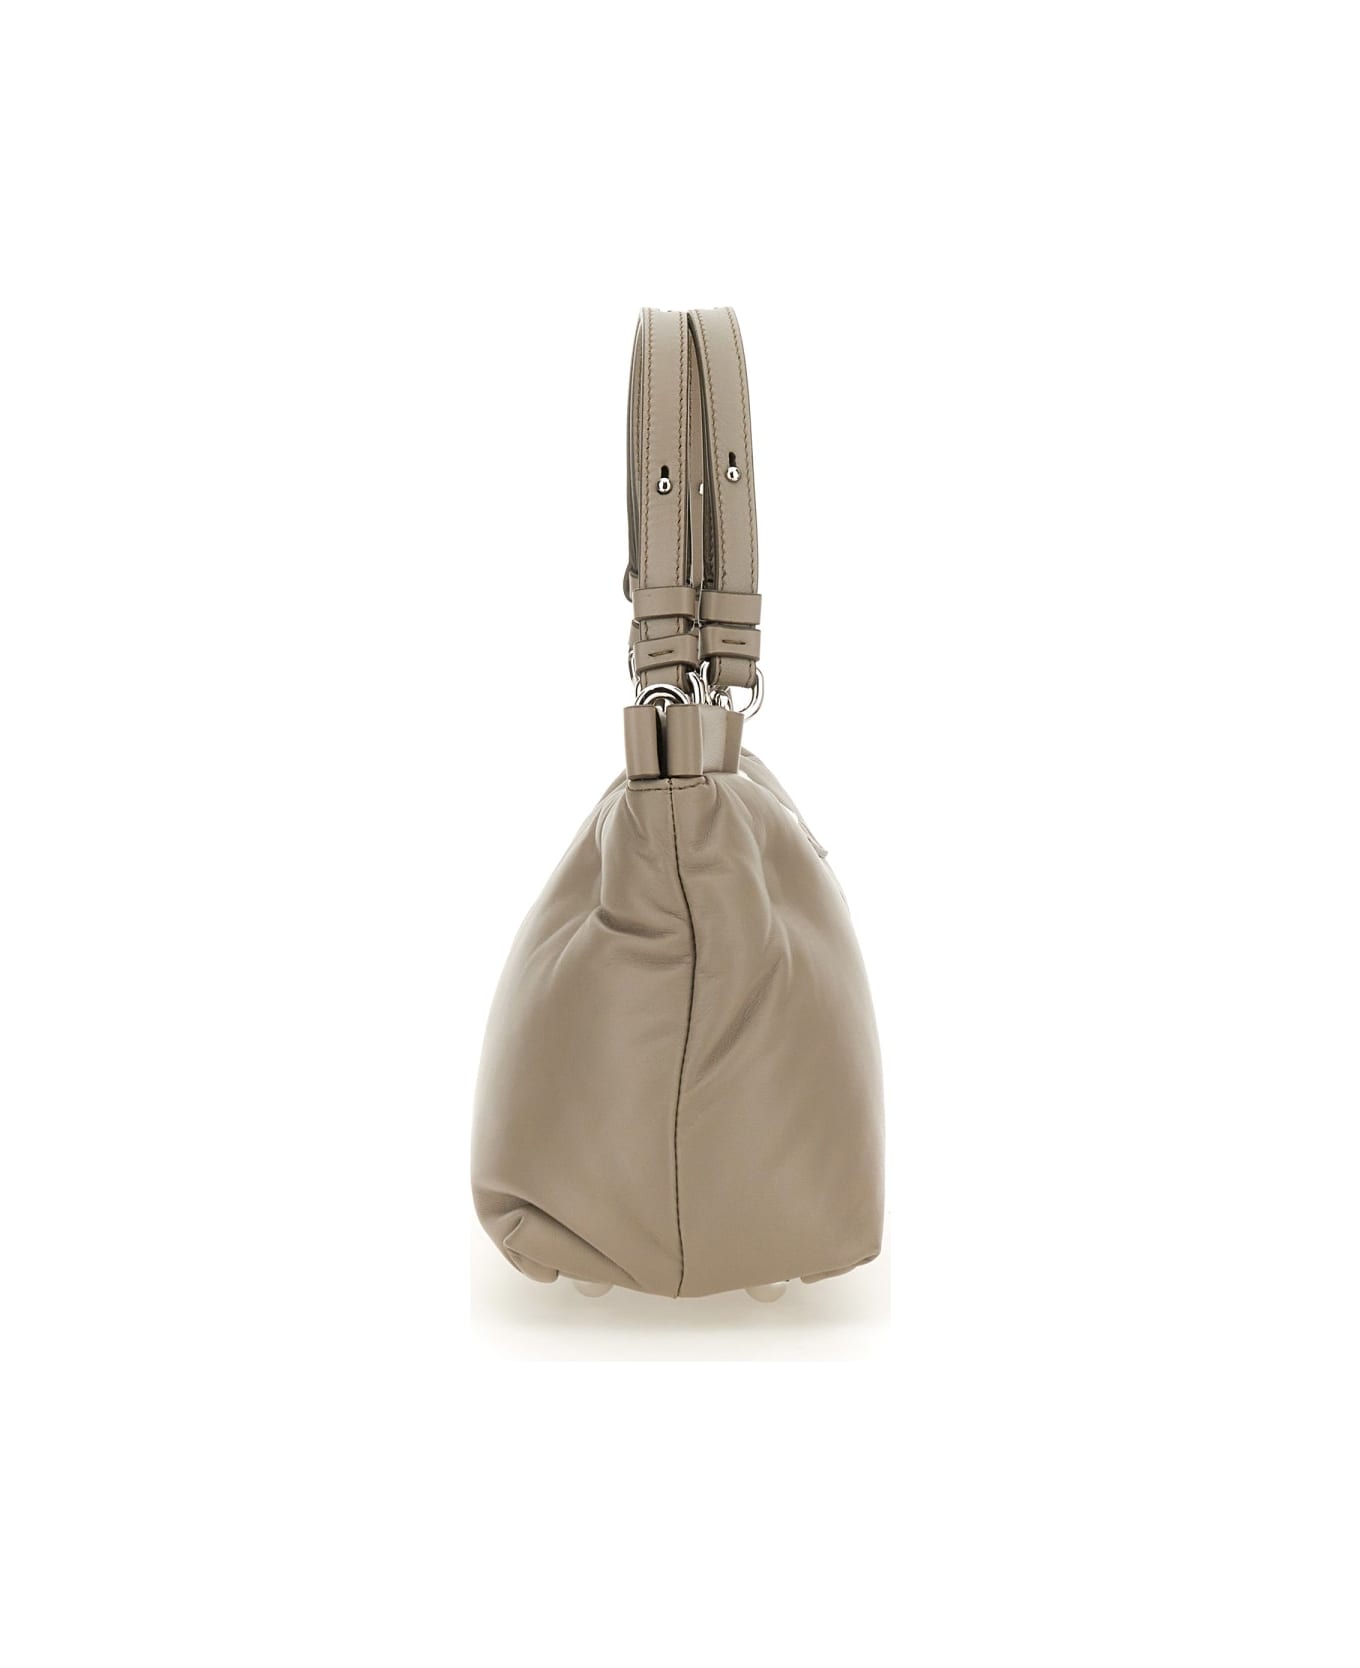 Maison Margiela 'glam Slam' Dove Grey Leather Bag - DOVE